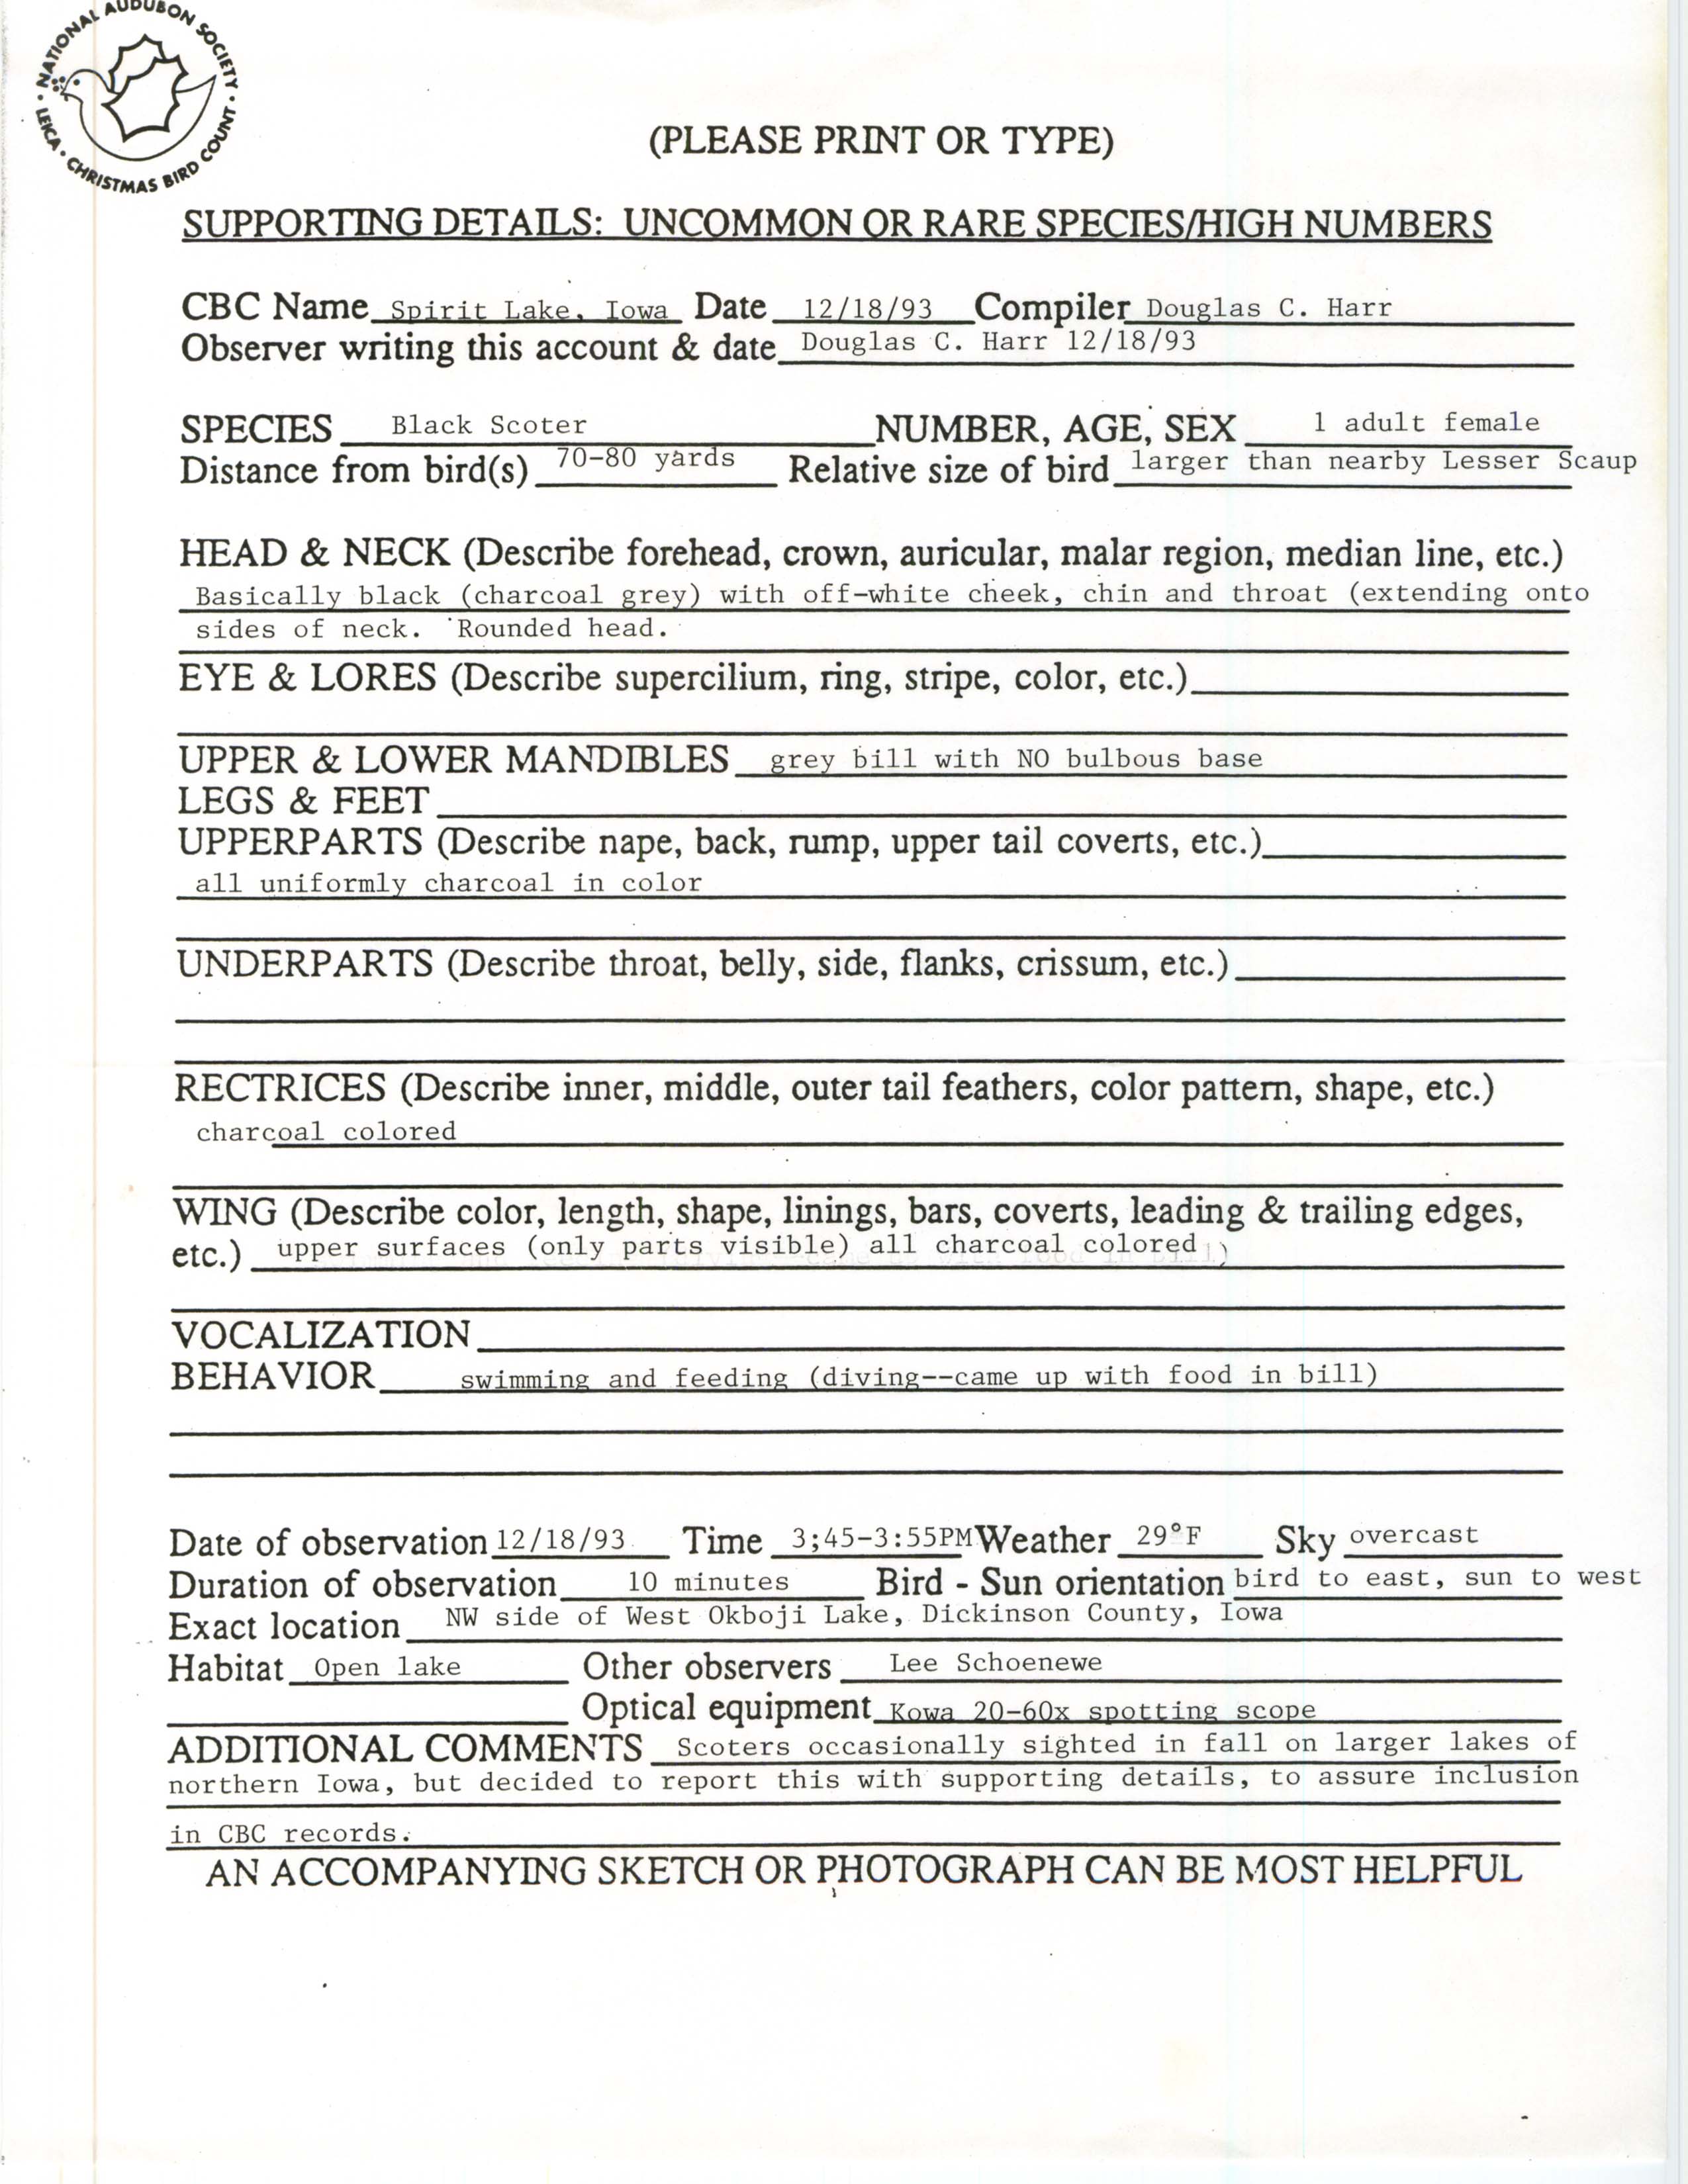 Rare bird documentation form for Black Scoter at West Okoboji Lake, 1993